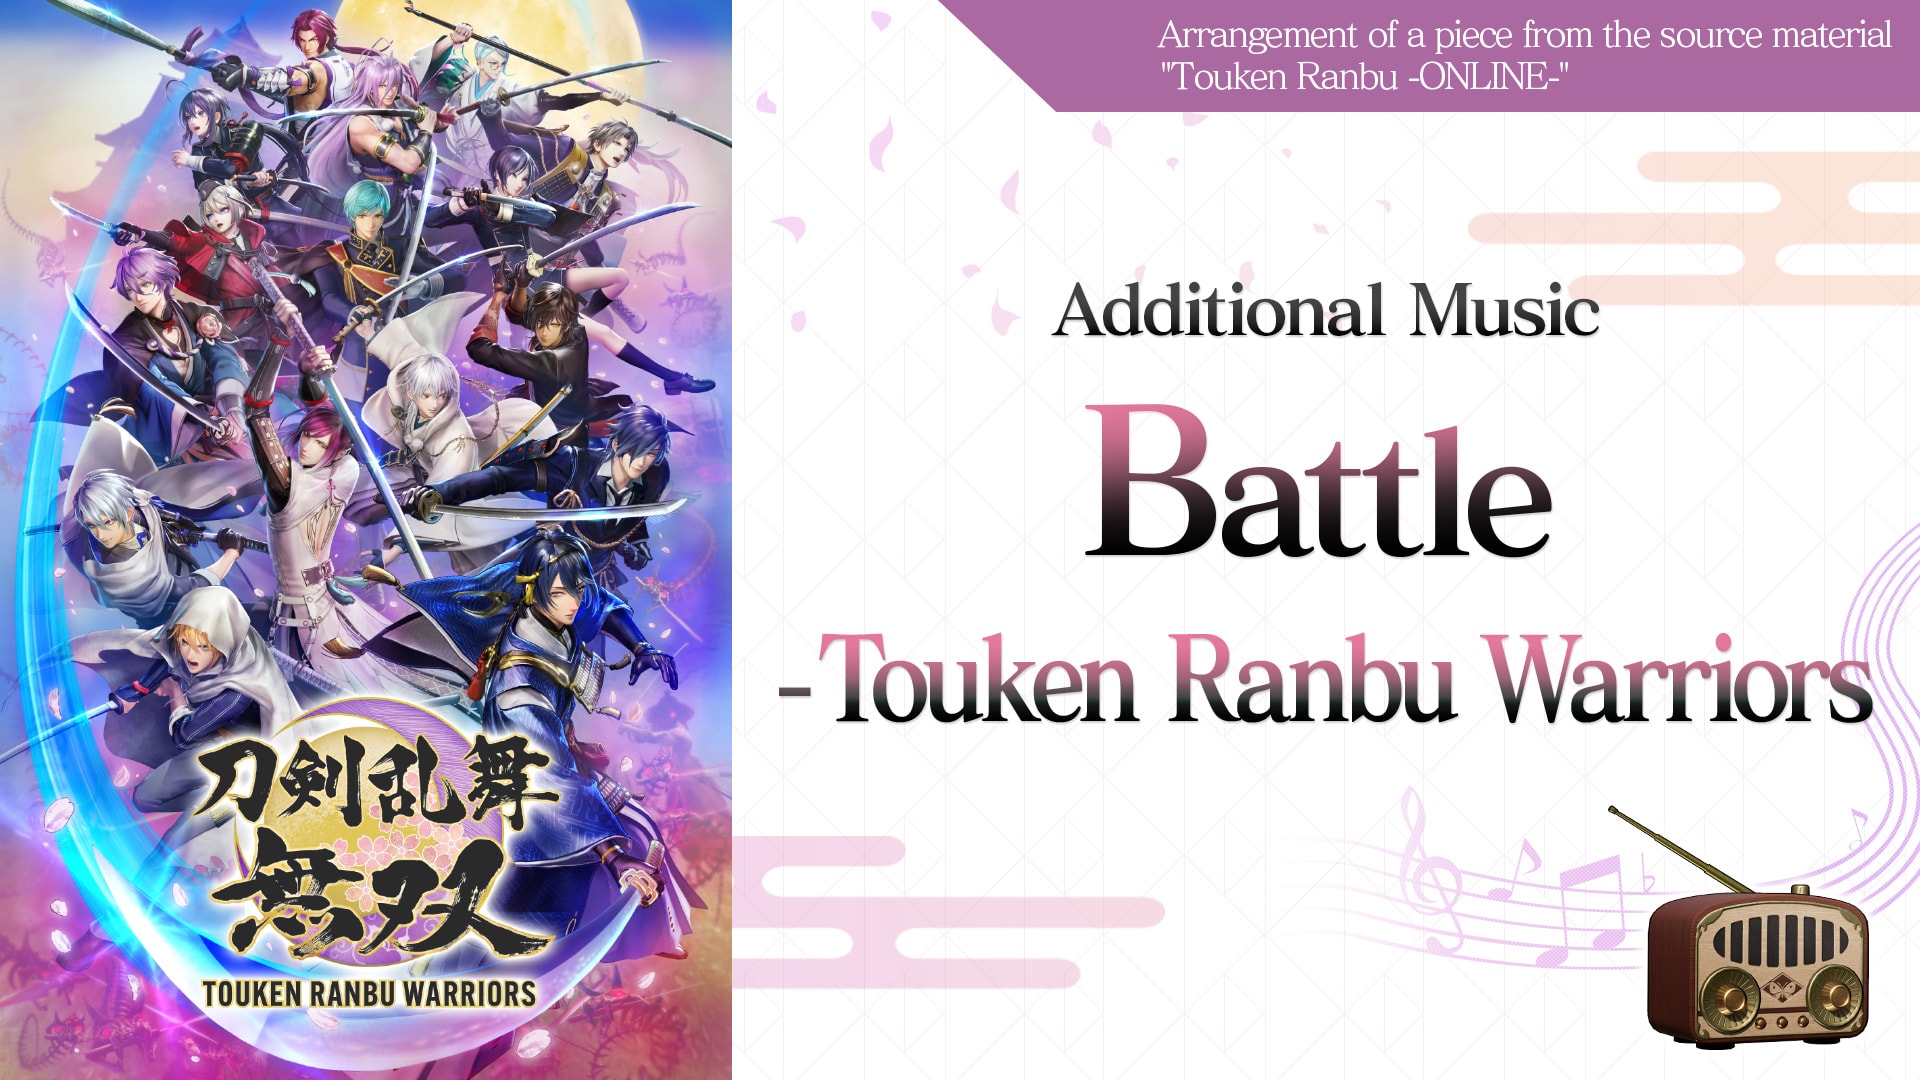 Additional Music "Battle - Touken Ranbu Warriors"